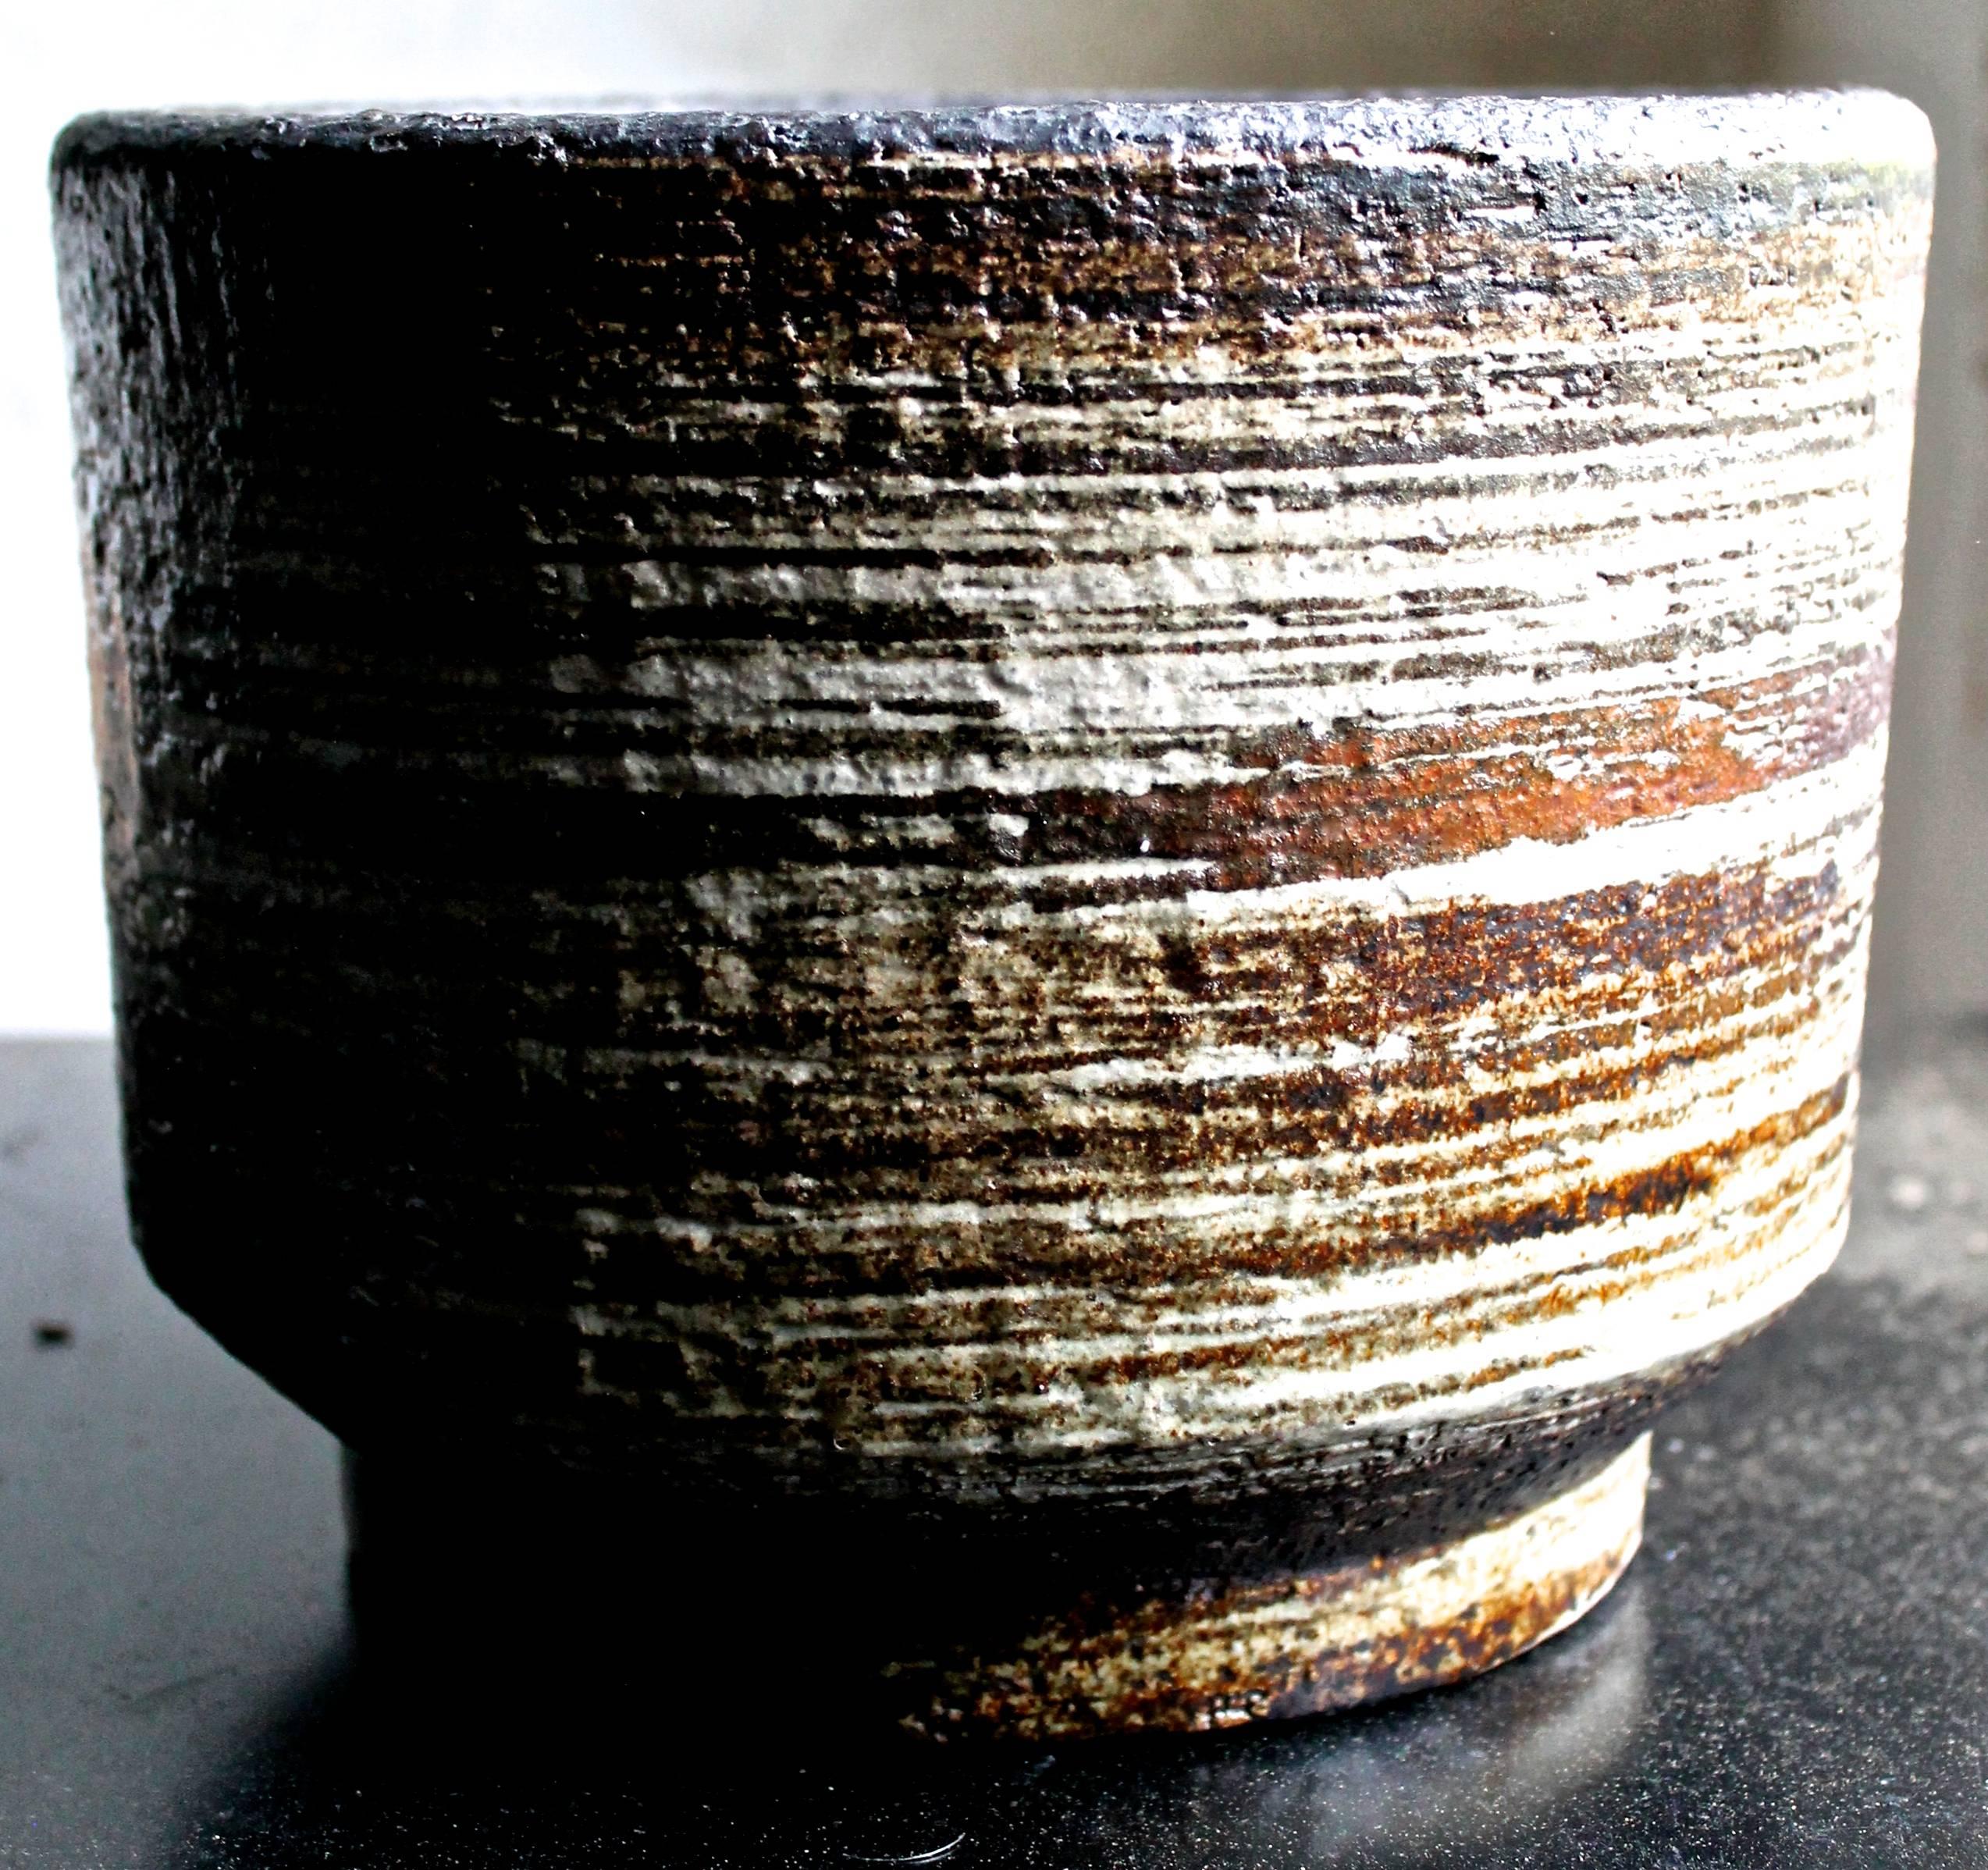 zaalberg pottery